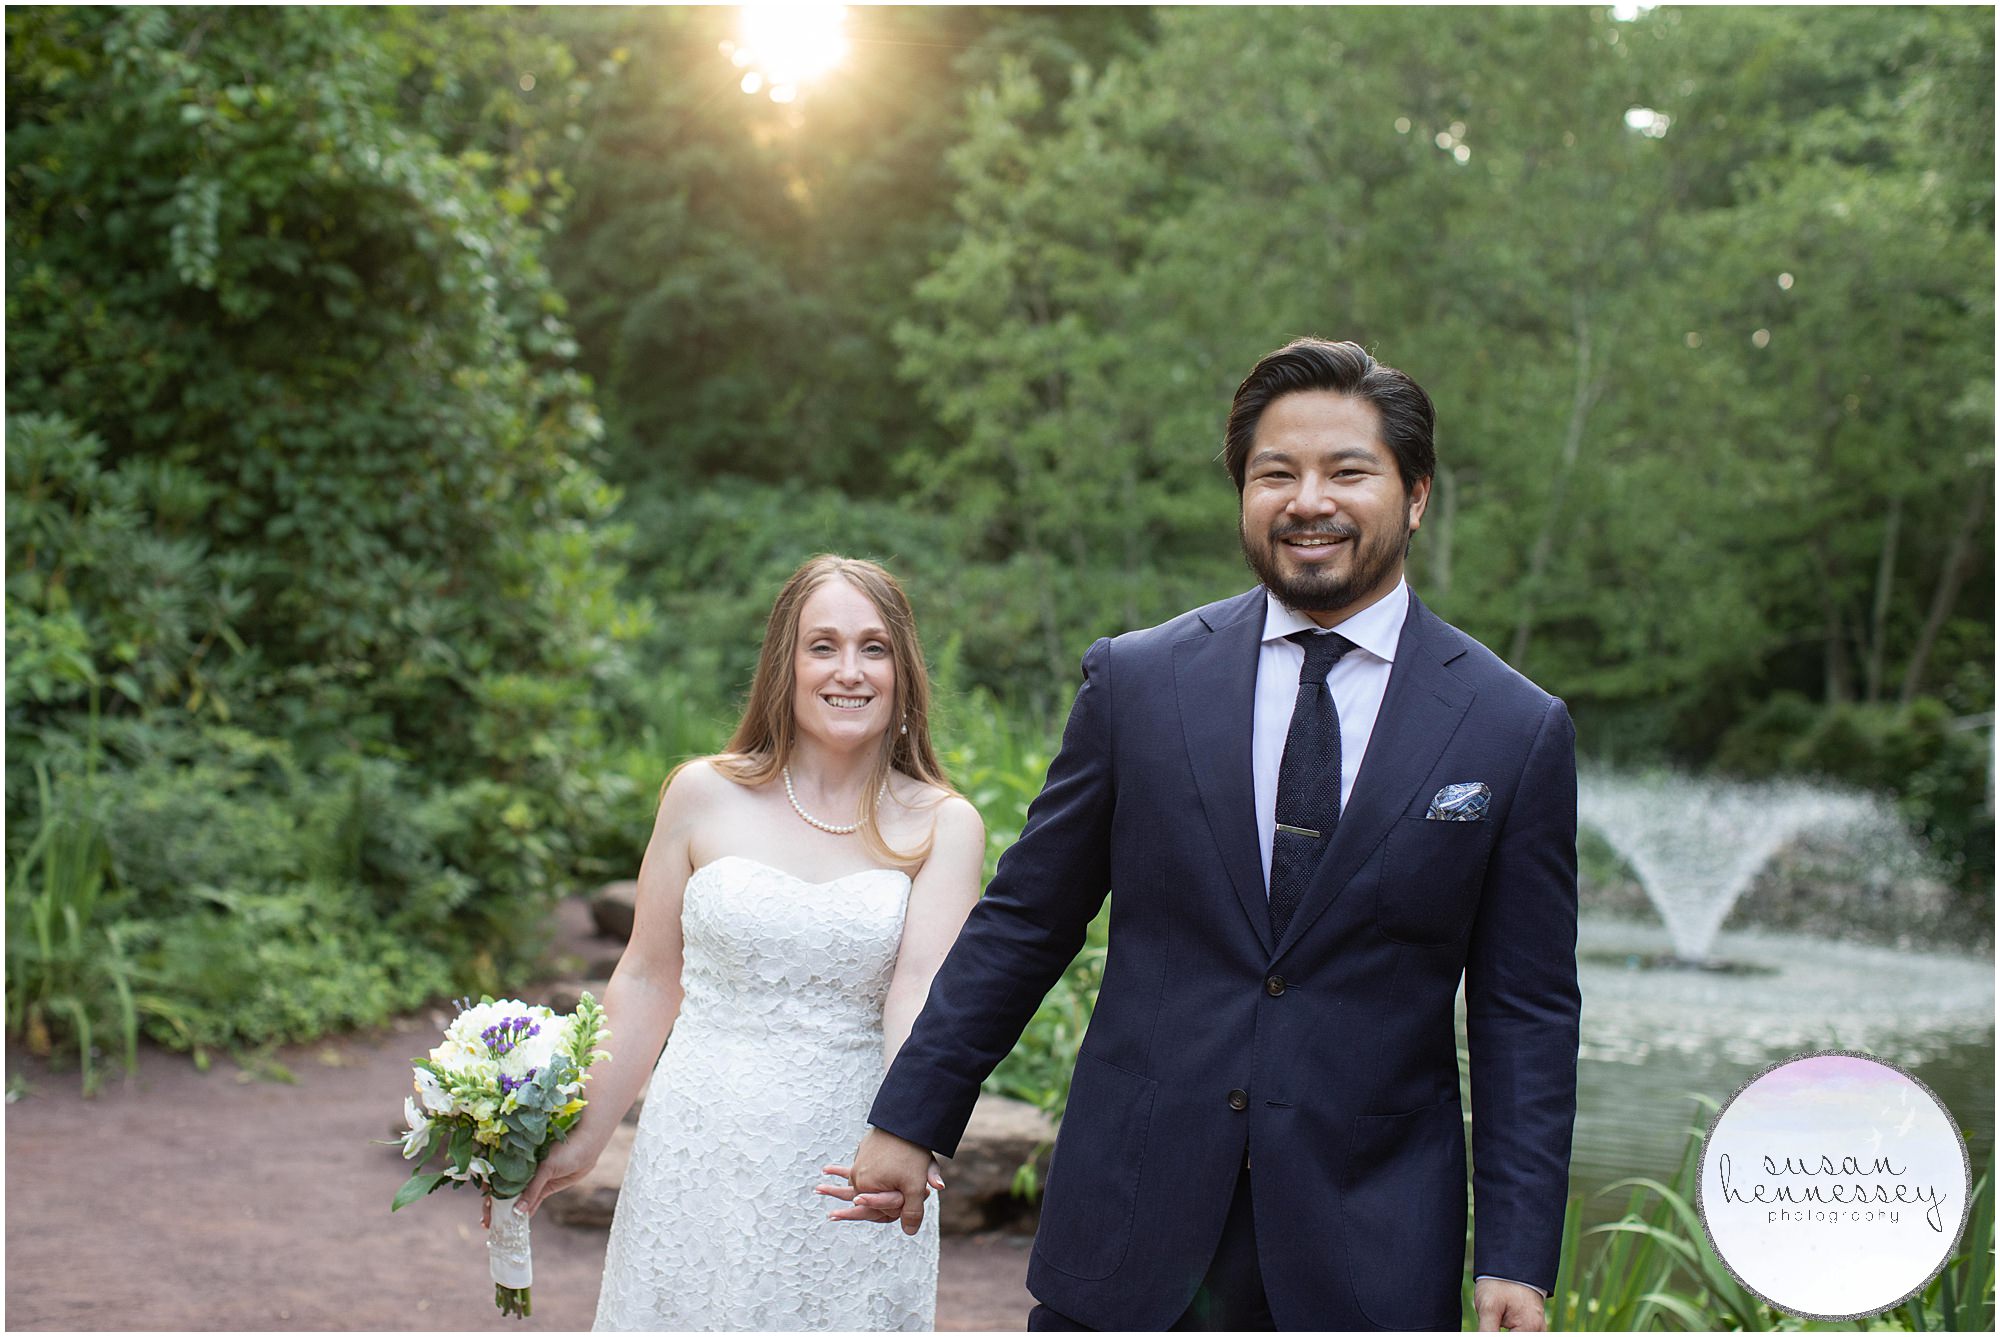 Bride and groom at their Sayen Gardens wedding in Hamilton, NJ